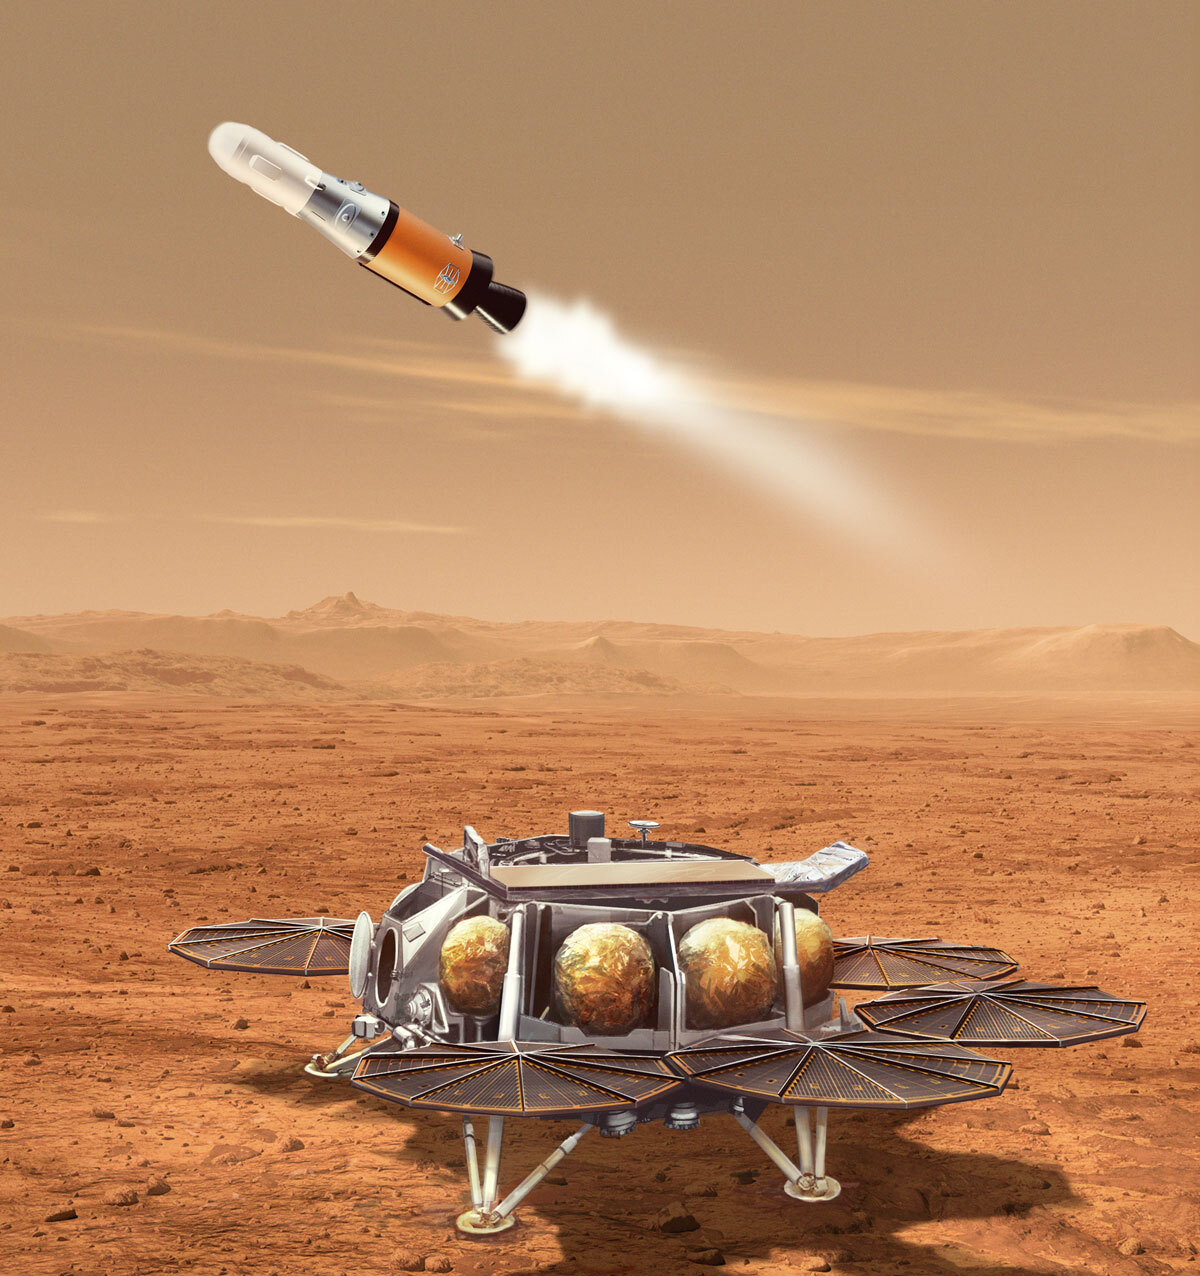 NASA, ESA to Discuss Mars Sample Return Mission